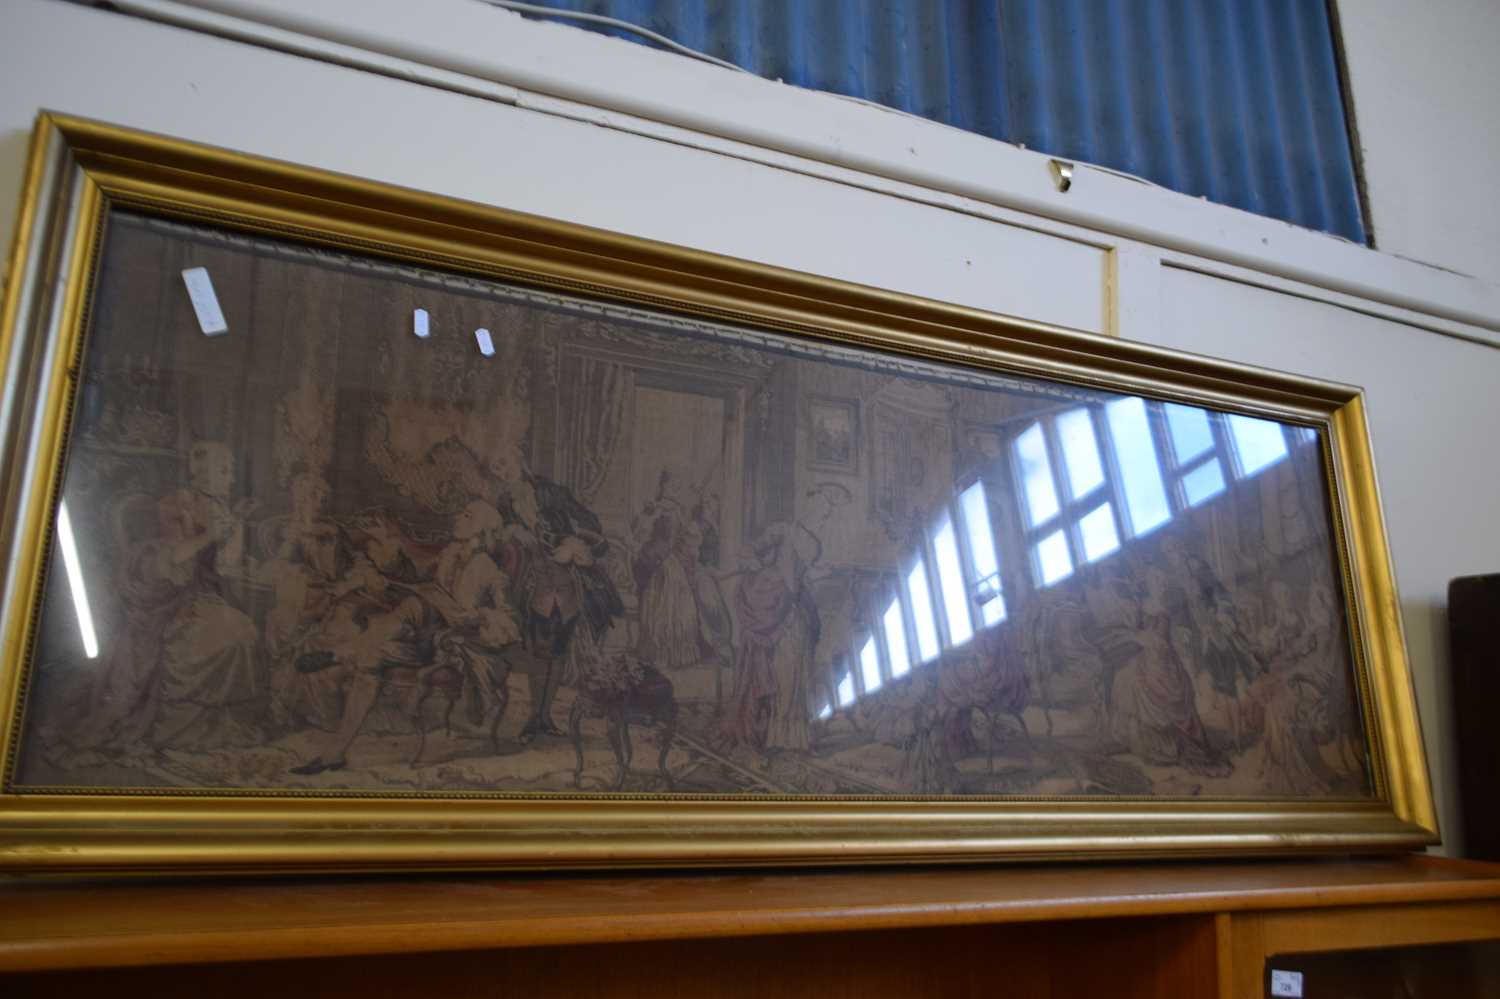 20th Century needlework picture of a grand interior scene, gilt framed